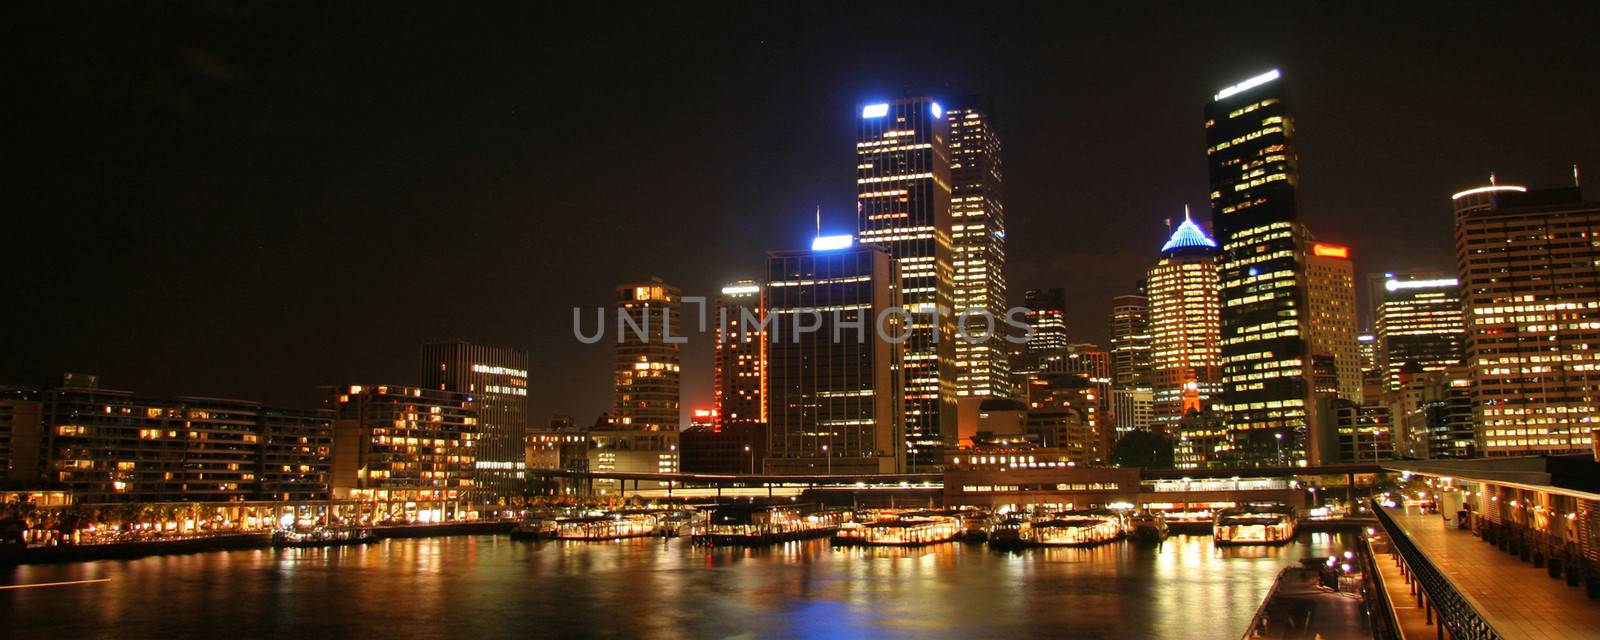 Scenic view of Sydney Harbor illuminated at night, Australia.